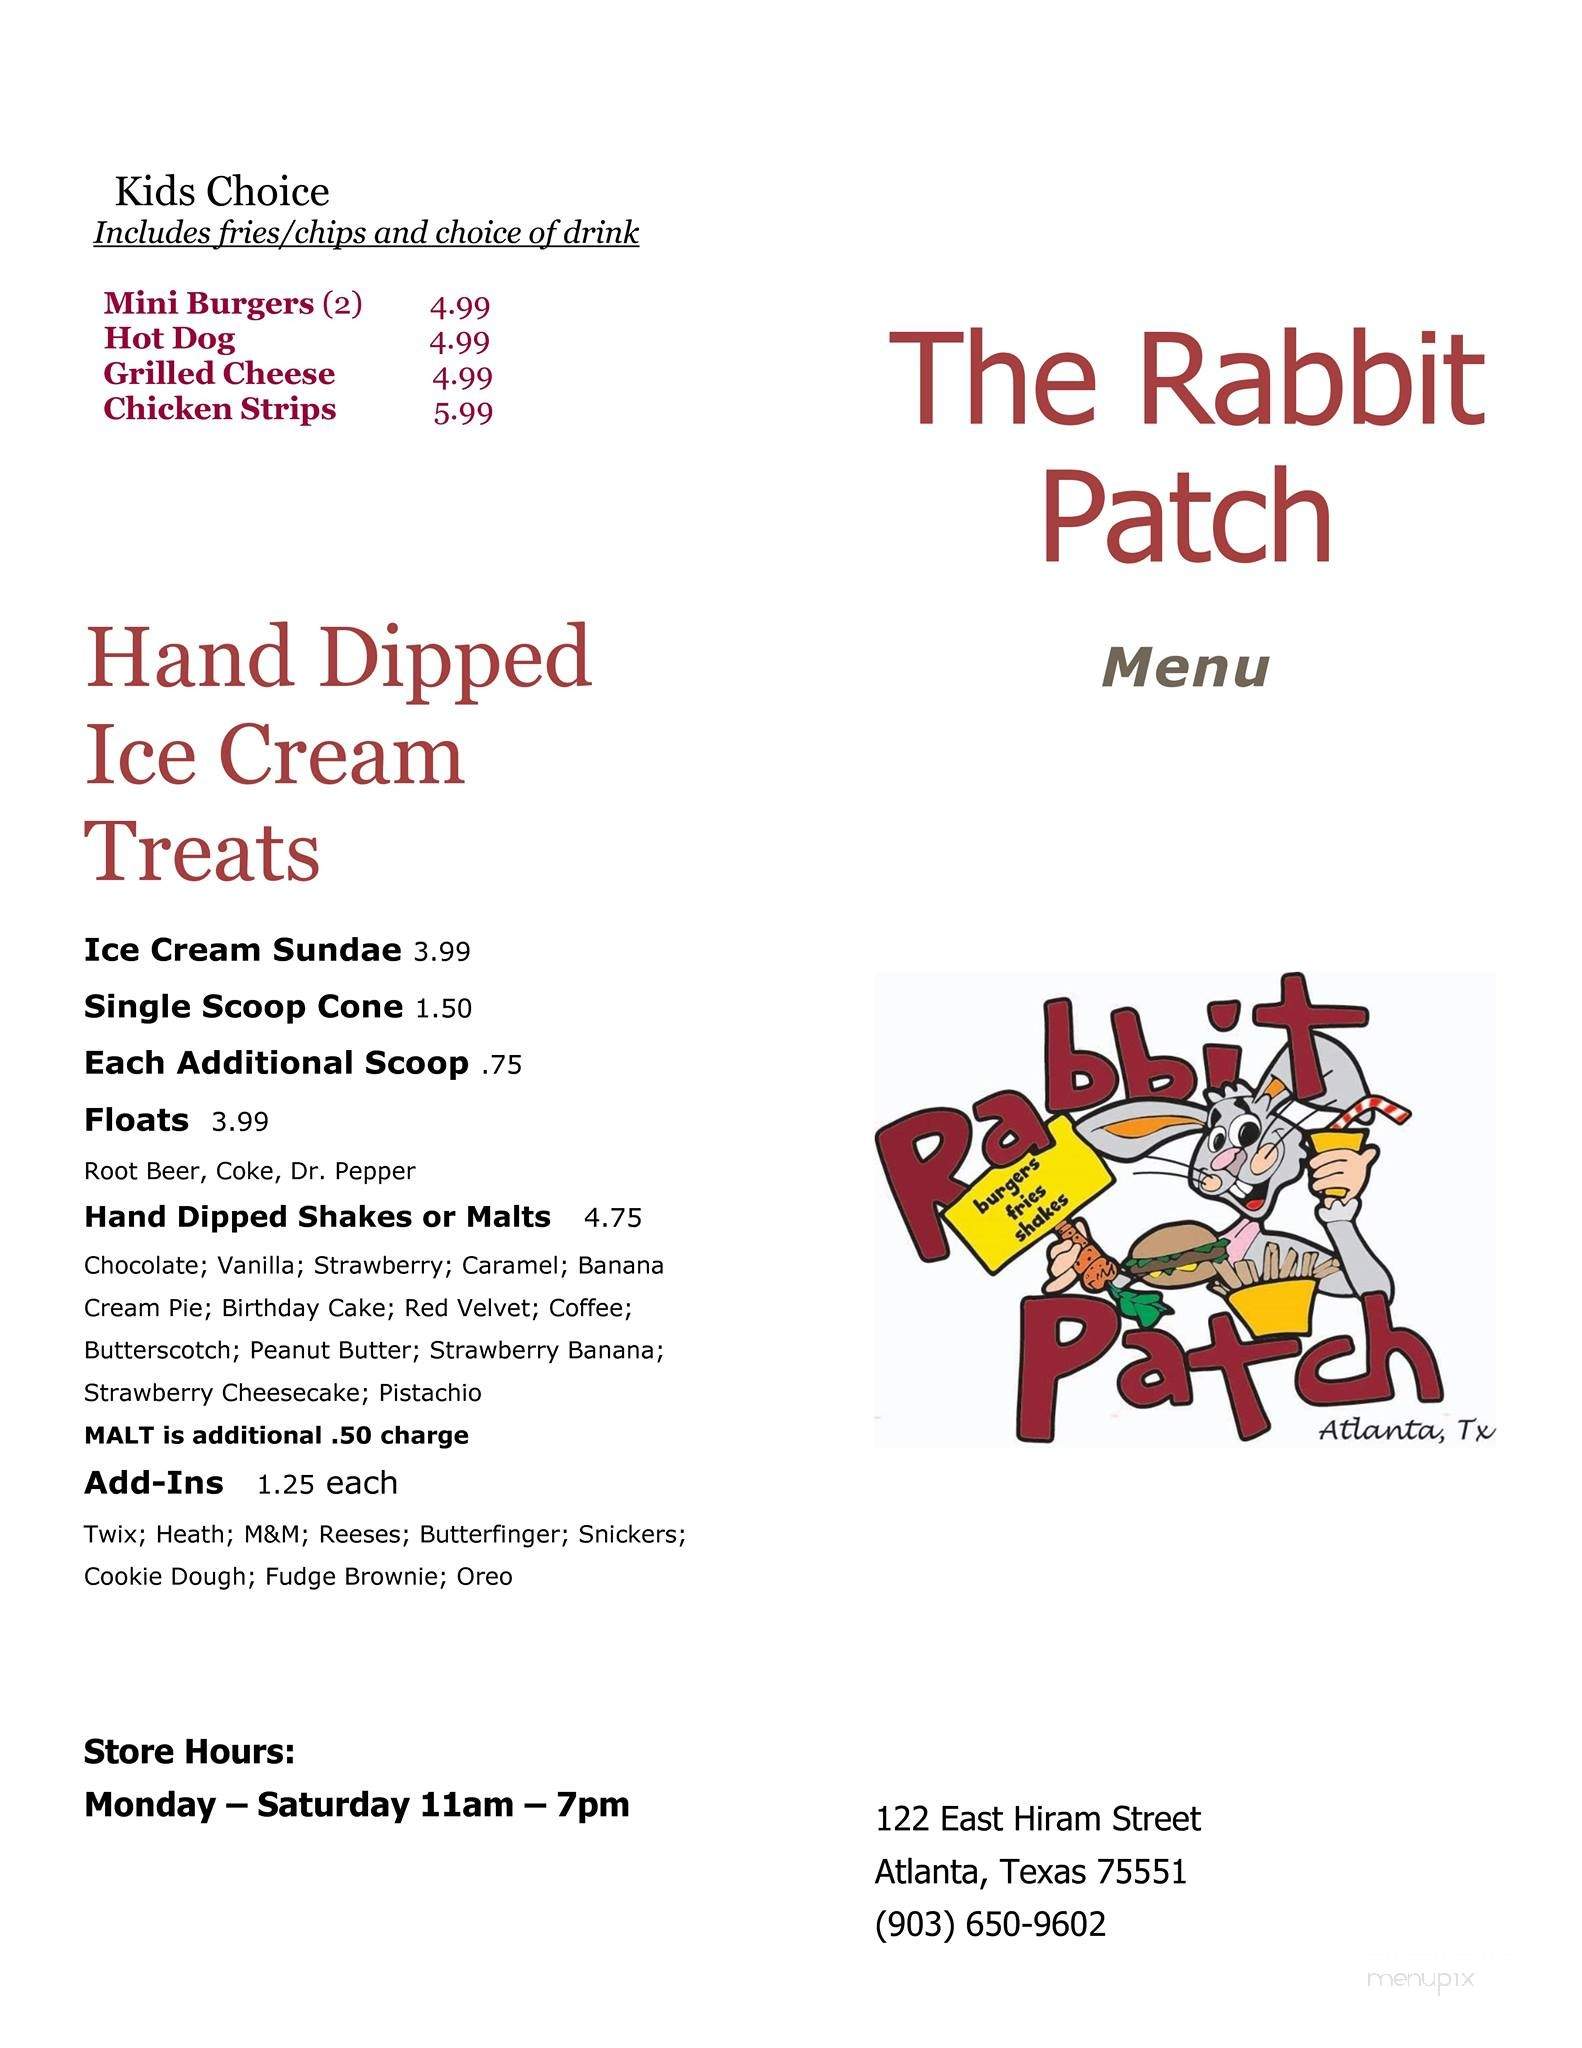 /28596424/The-Rabbit-Patch-Atlanta-TX - Atlanta, TX